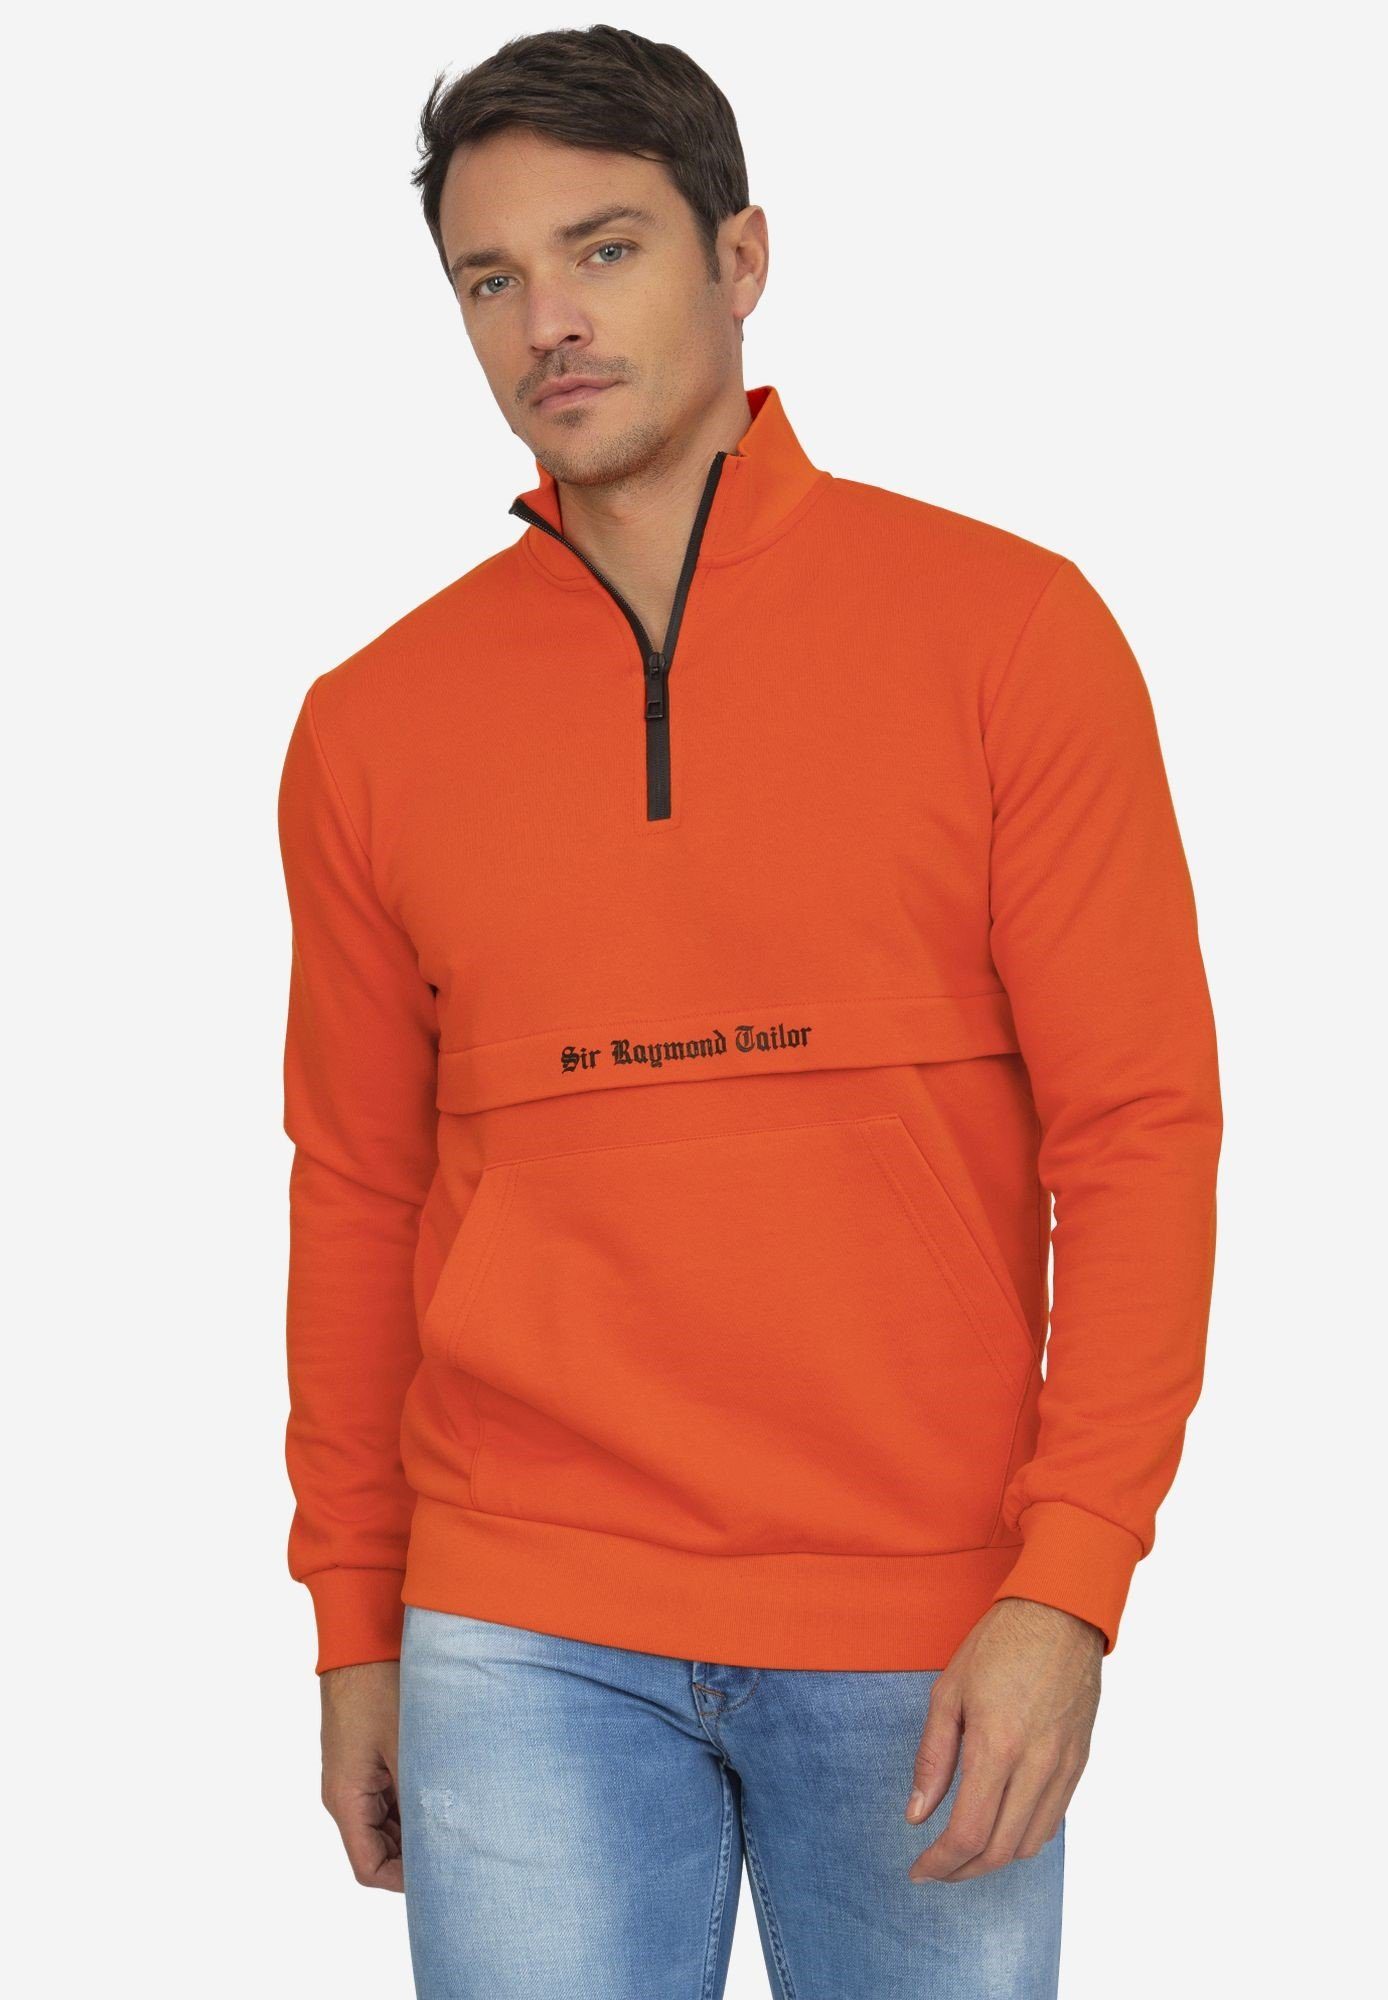 Sir Raymond Tailor Orange Sweatshirt Hanico